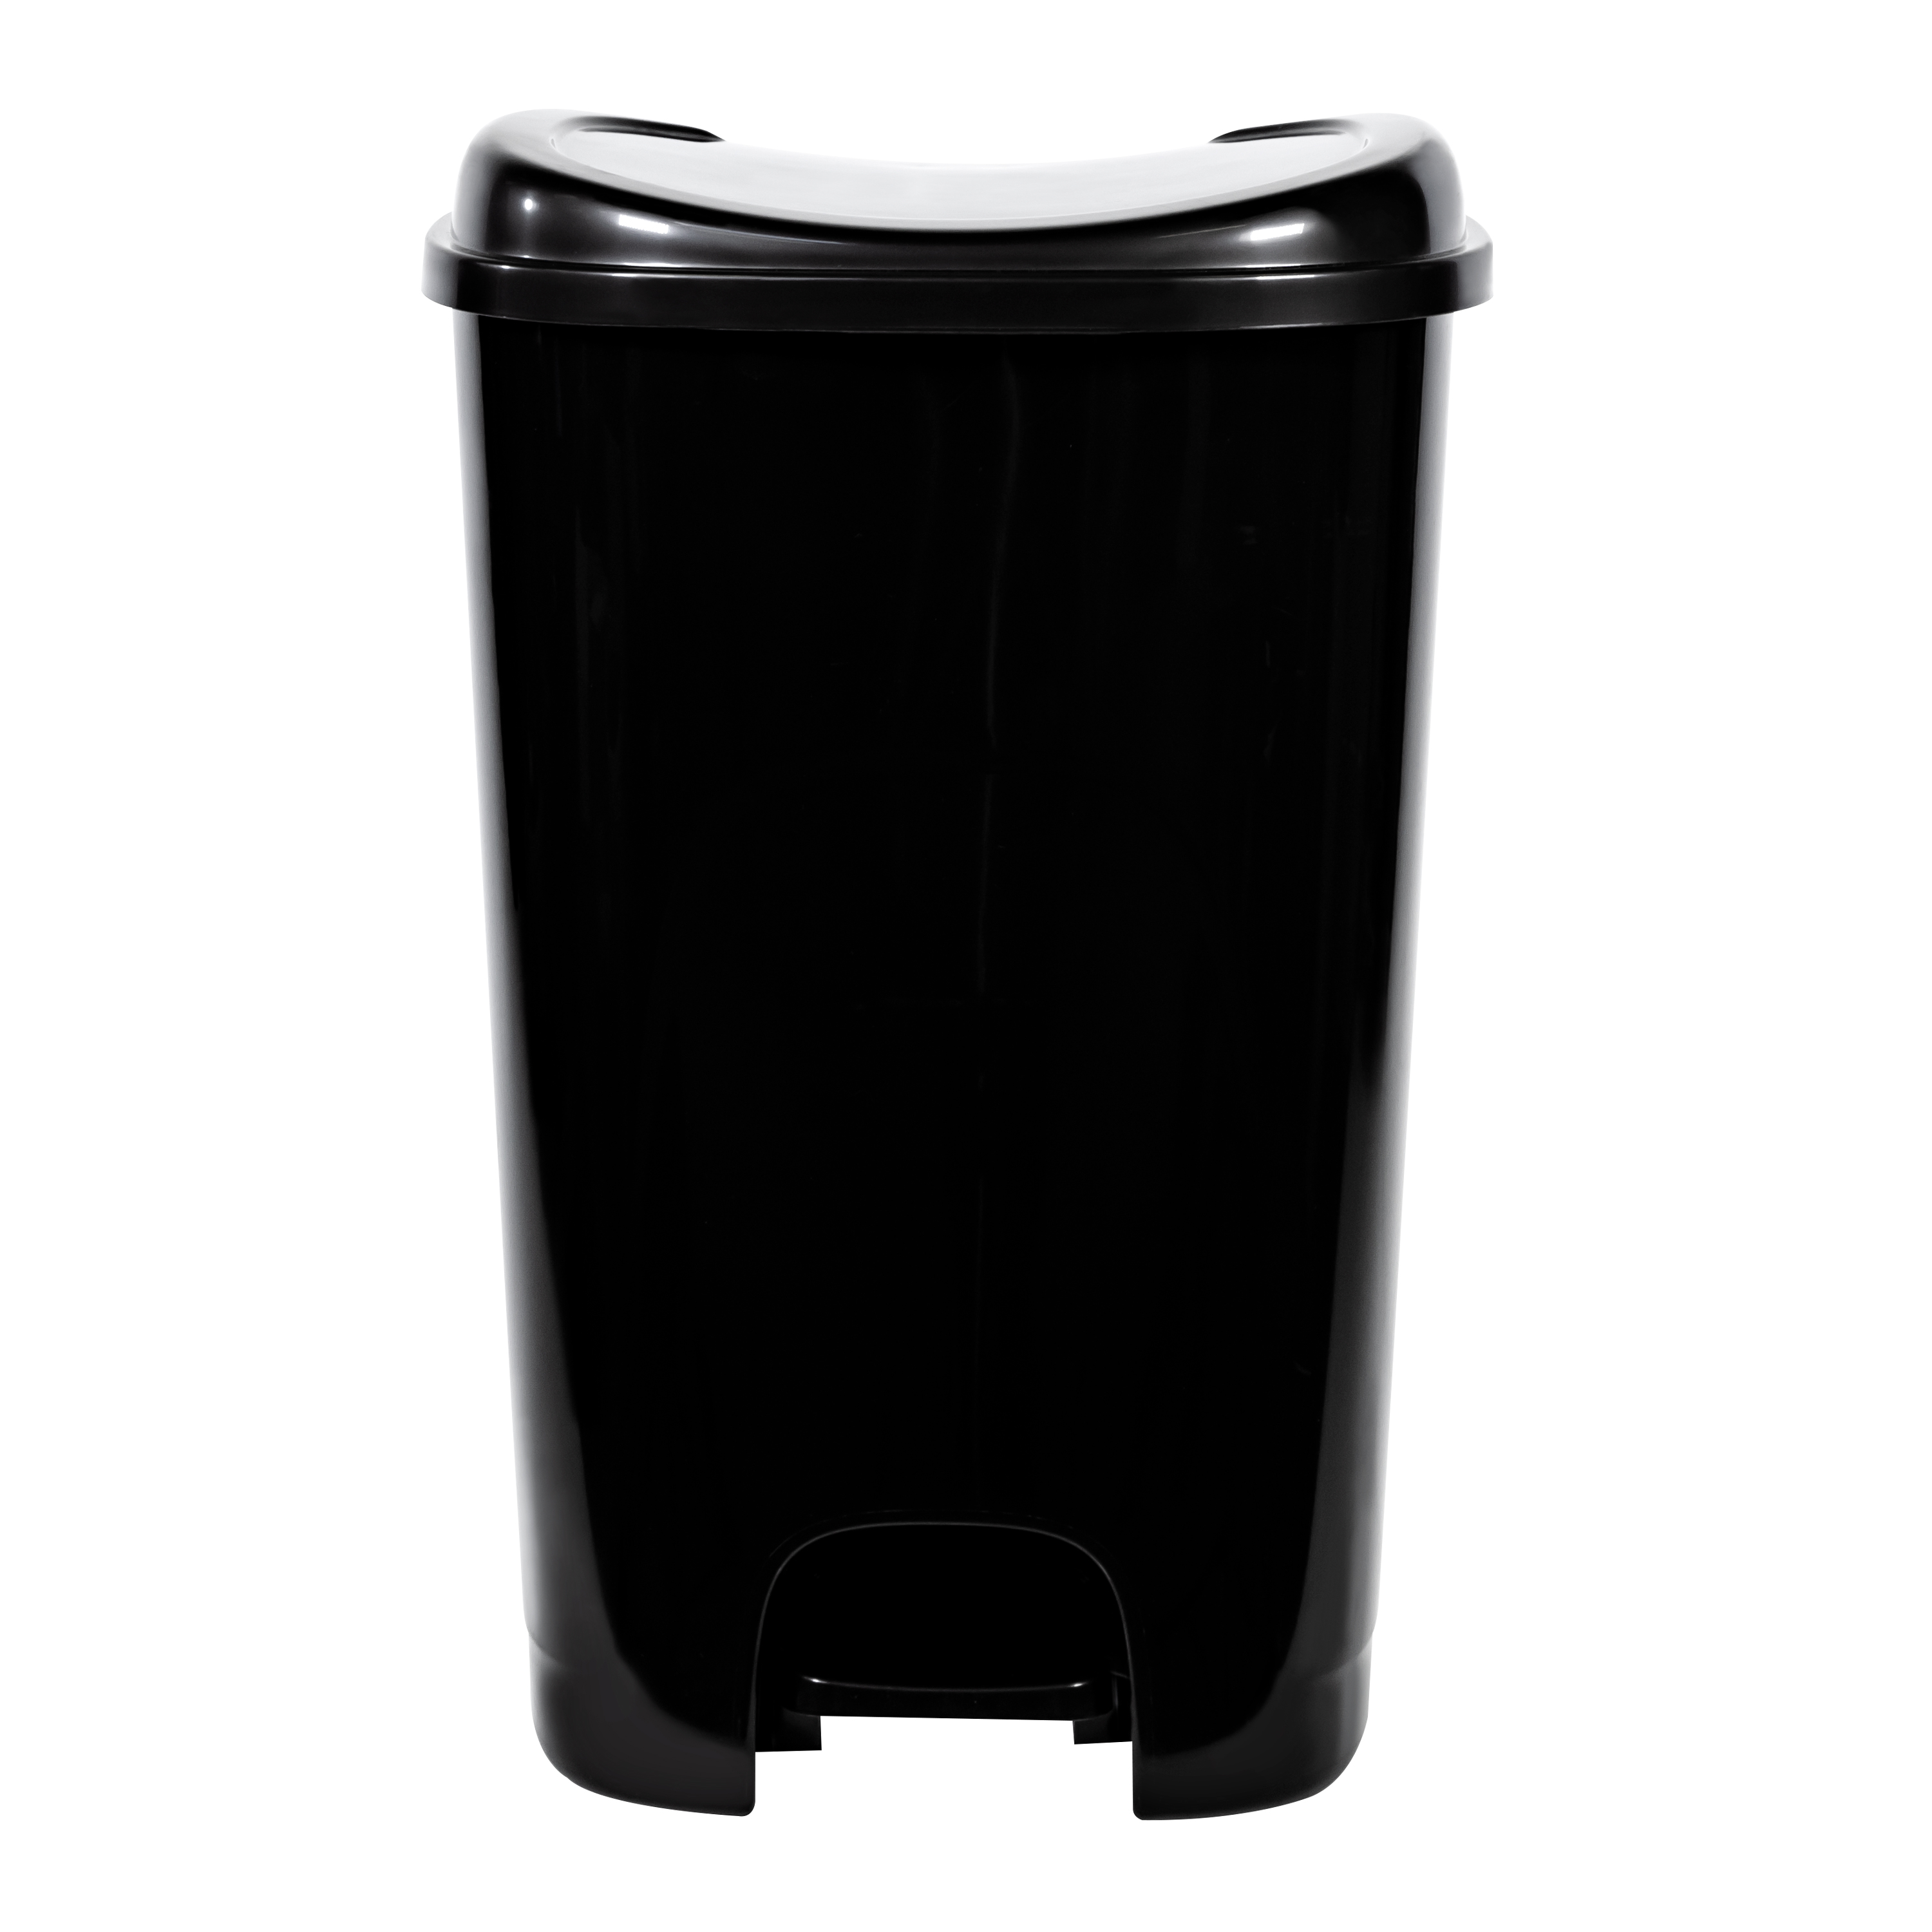 Hefty StepOn Ktichen Garbage Can, High Polish Black, 13 gal - image 2 of 4